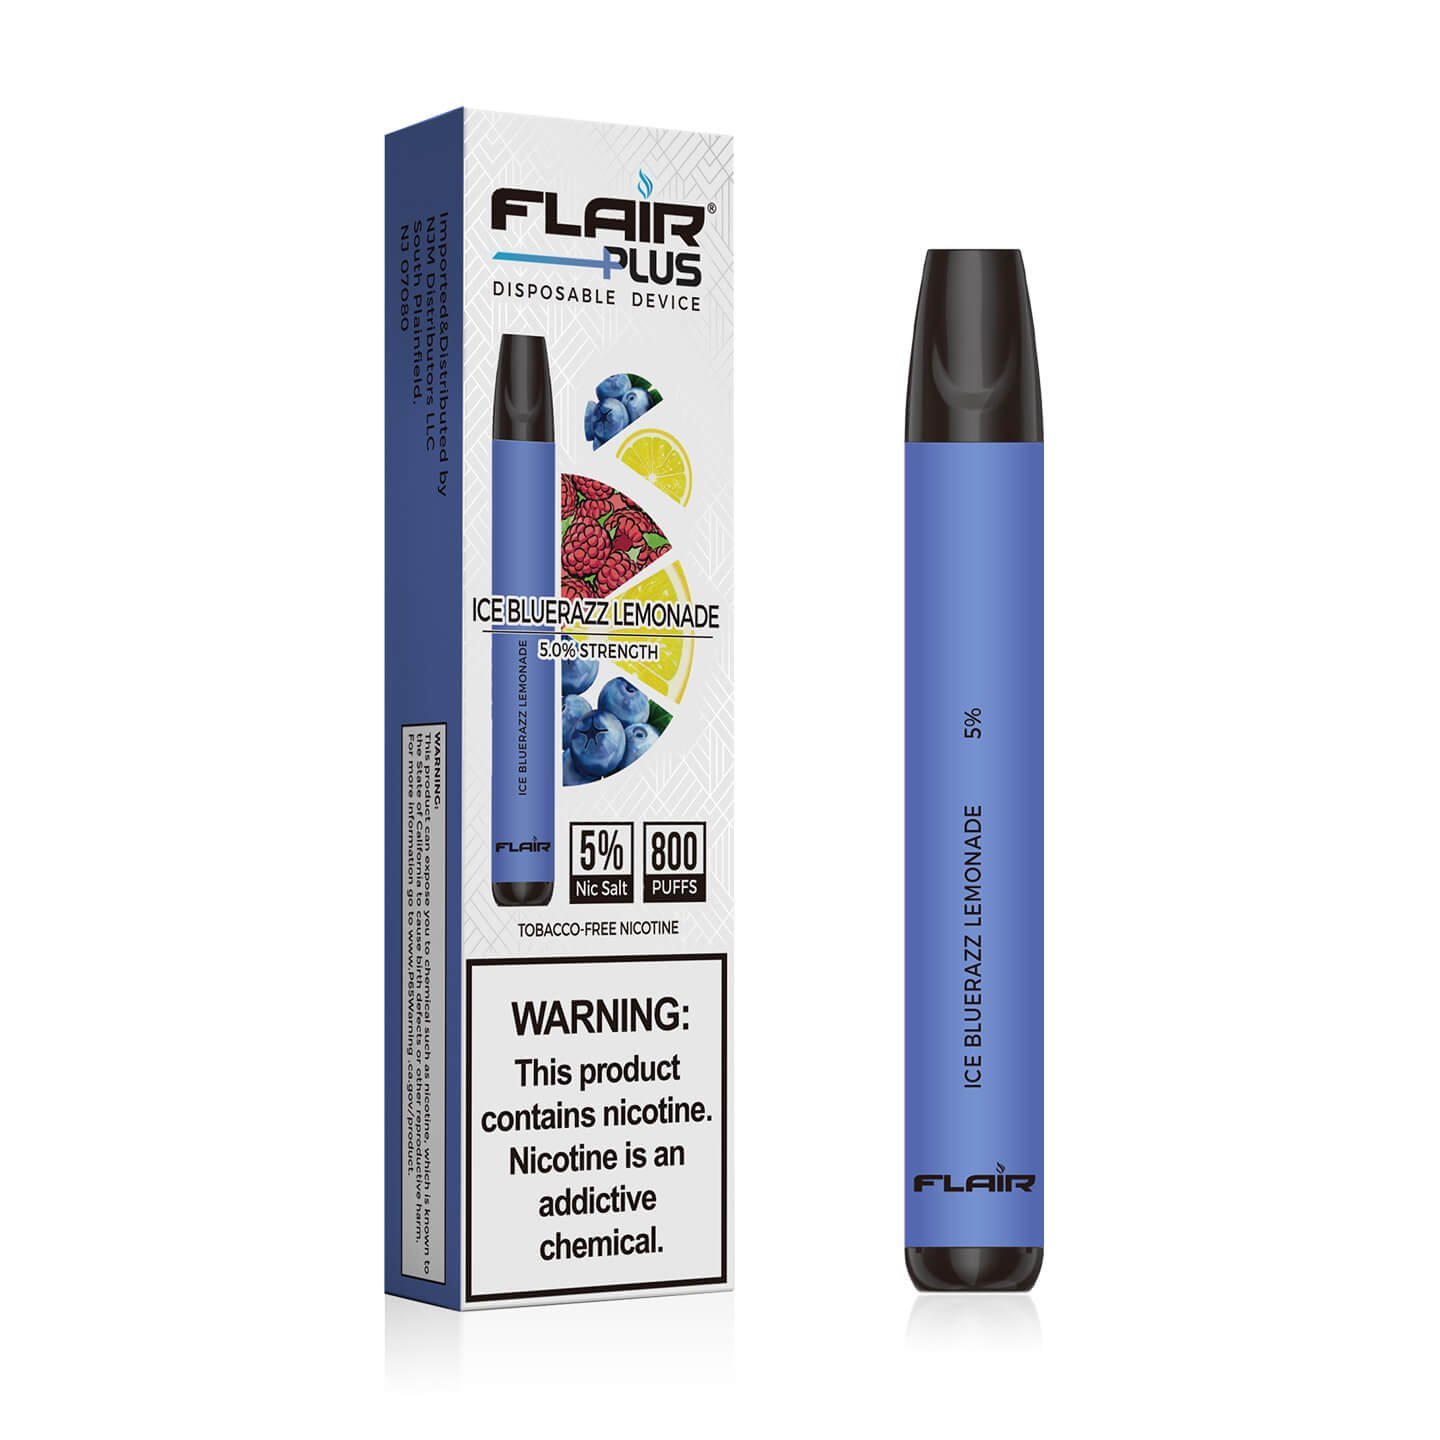 Flair Plus Disposable Devices (Ice Bluerazz Lemonade- 800 Puffs)